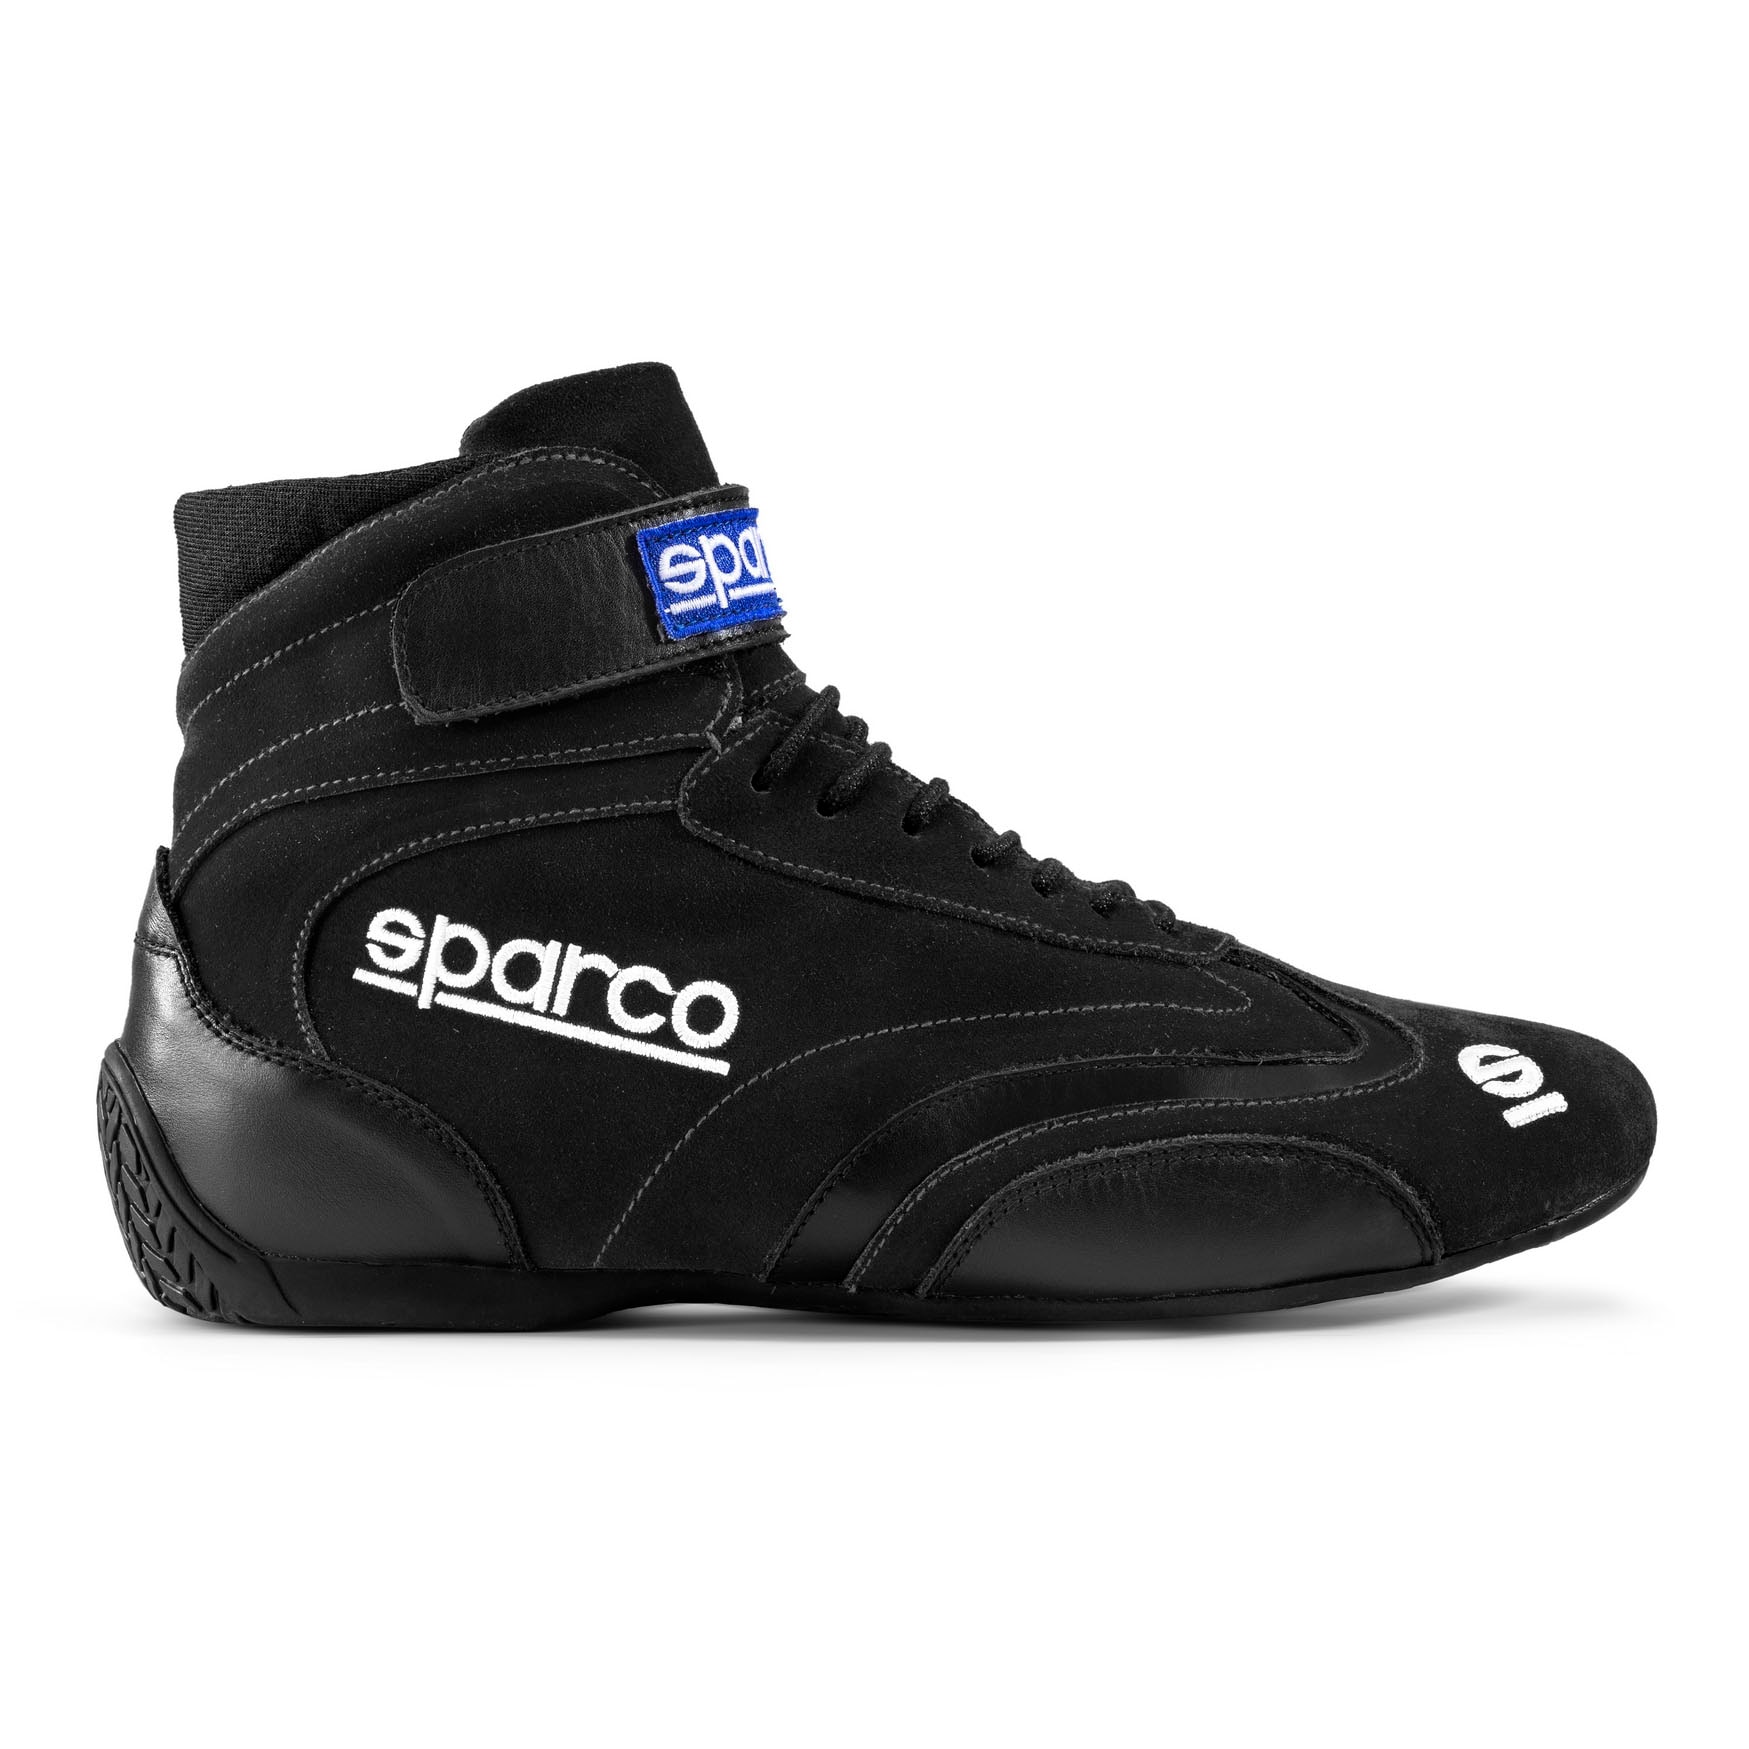 Shoes Sparco Top Black